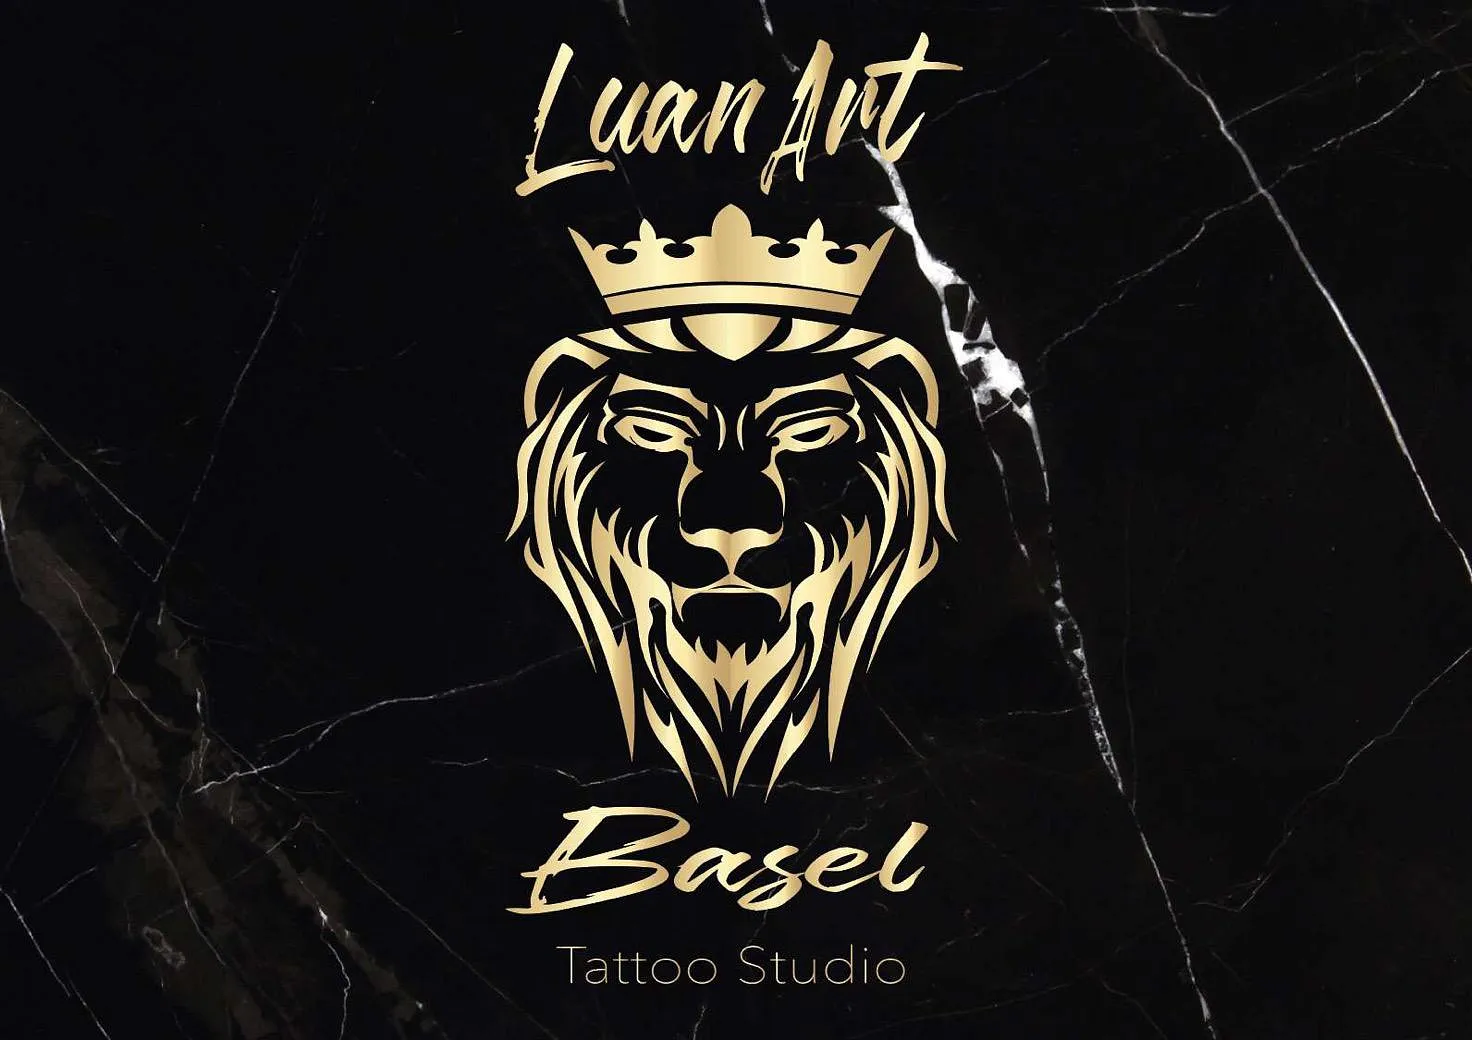 Luan Art Tattoo Studio